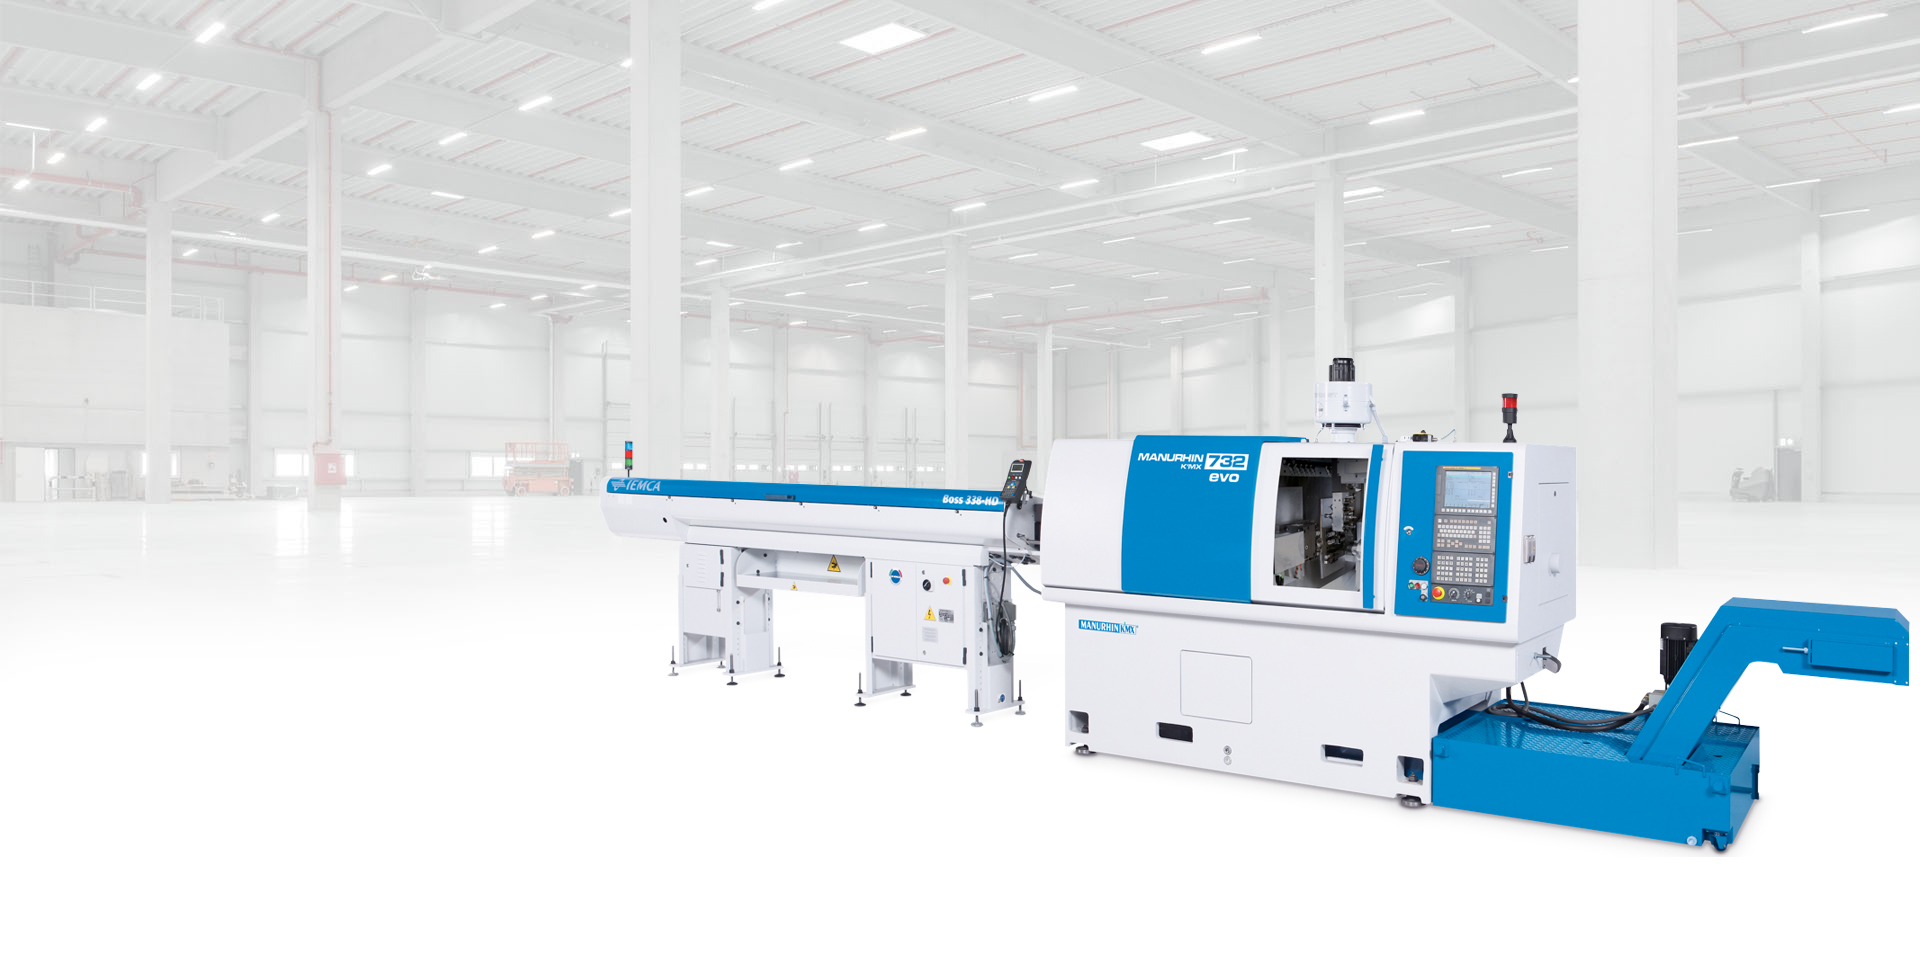 TAJMAC Group high-performance machining centres